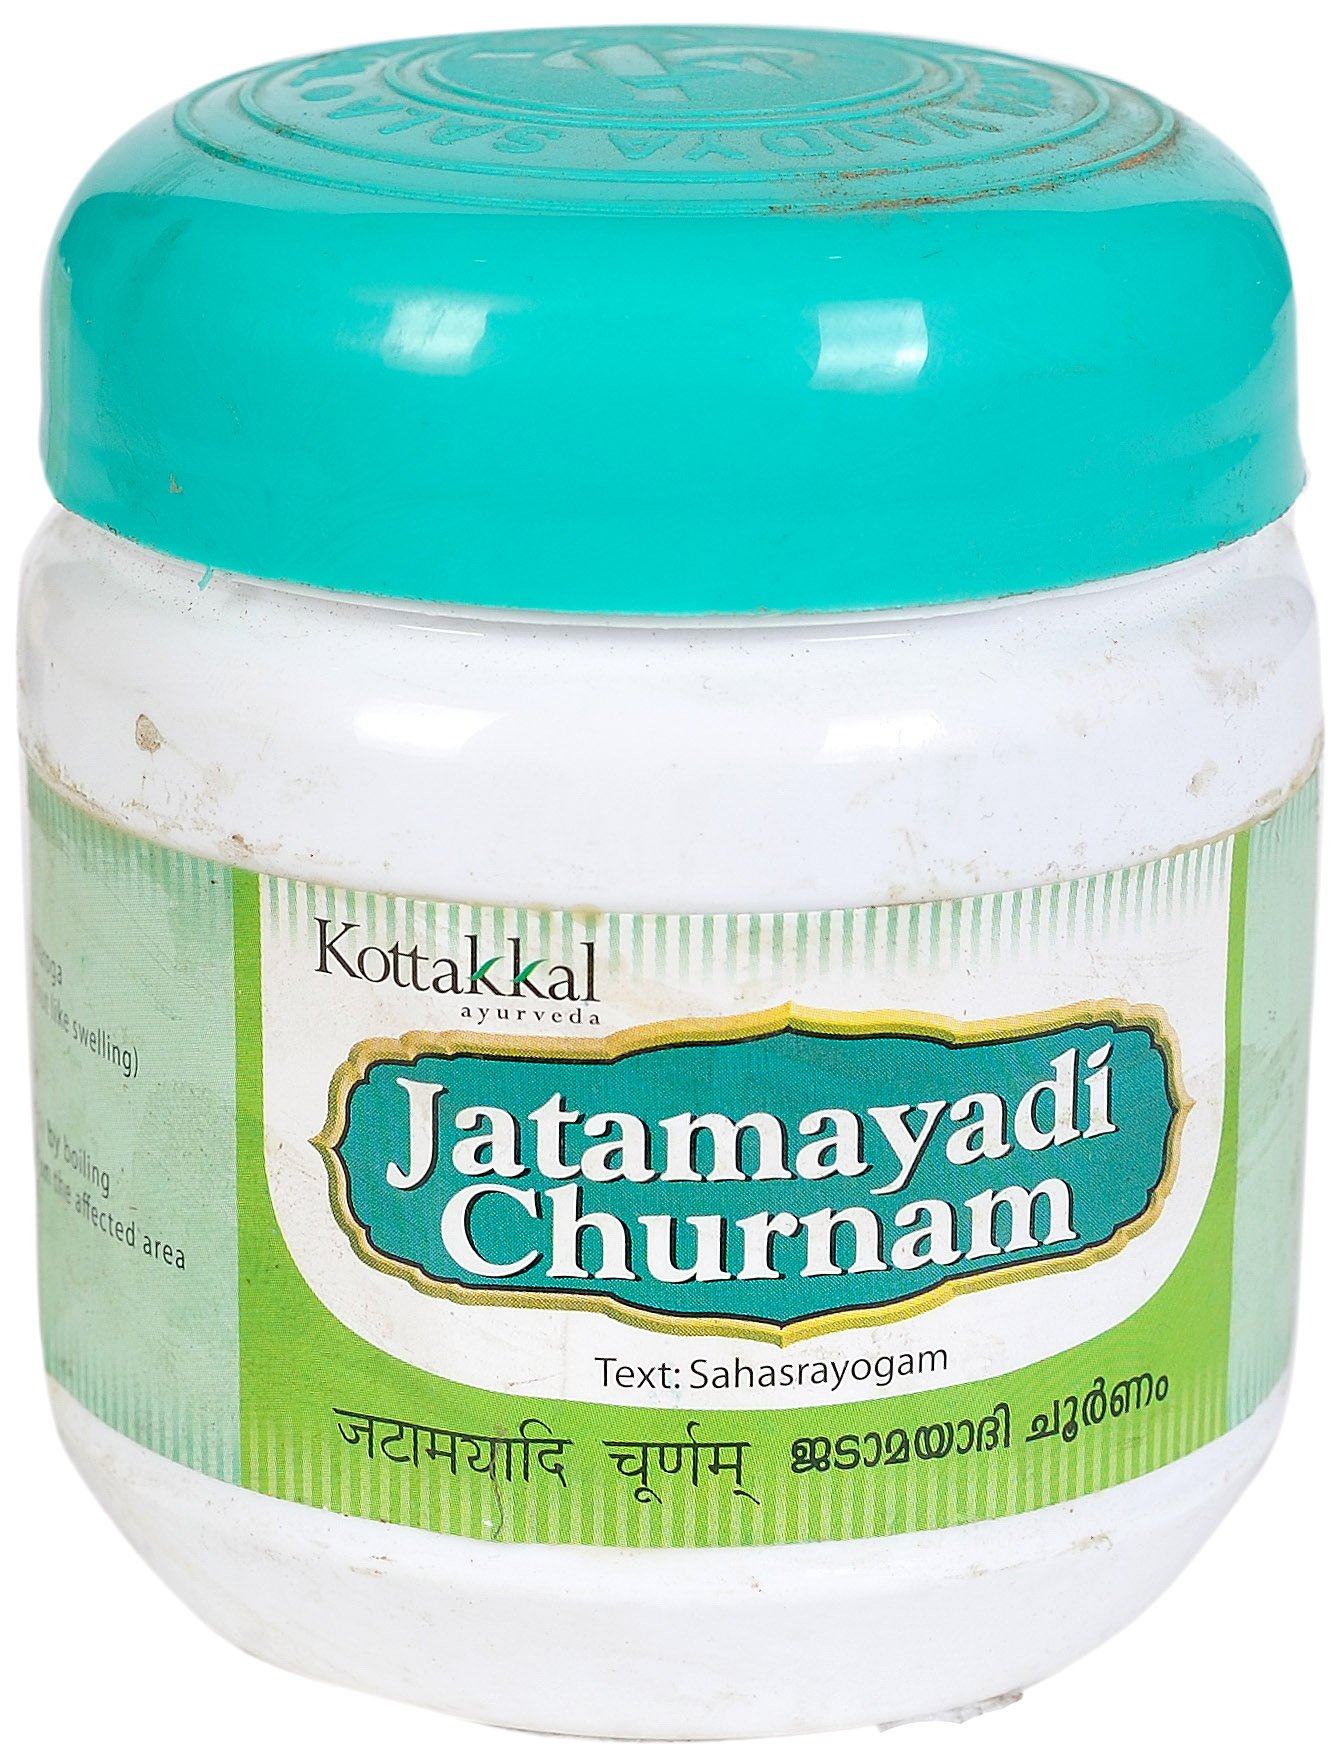 Jatamayadi Churnam - book cover